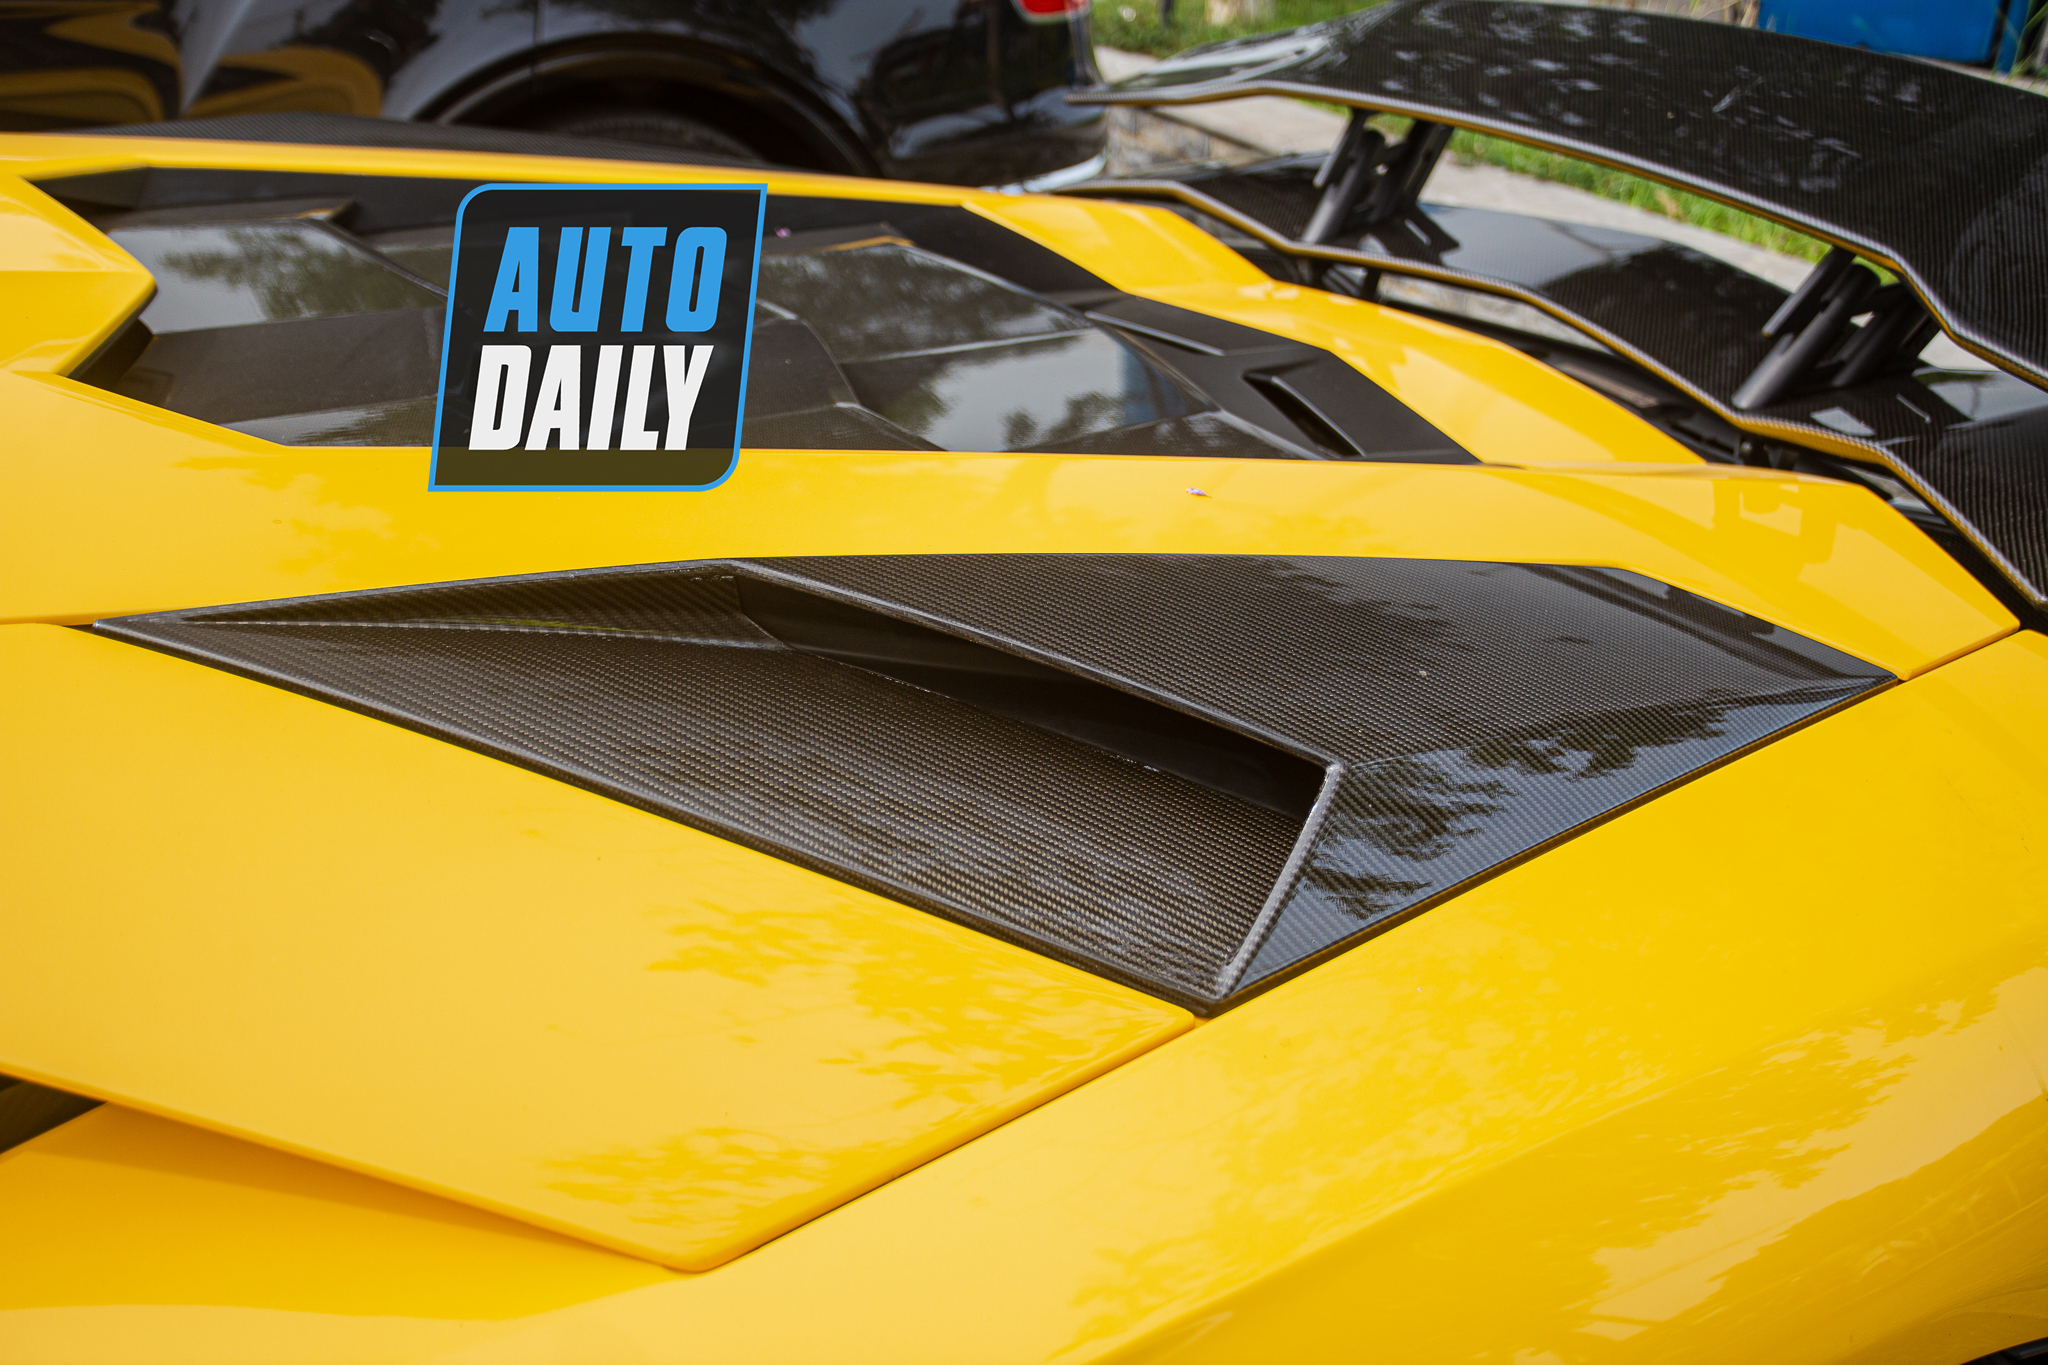 Chi tiết Lamborghini Aventador S độ khủng giá 45 tỷ lamborghini-aventador-s-45-ty-do-khung-autodaily-8.JPG